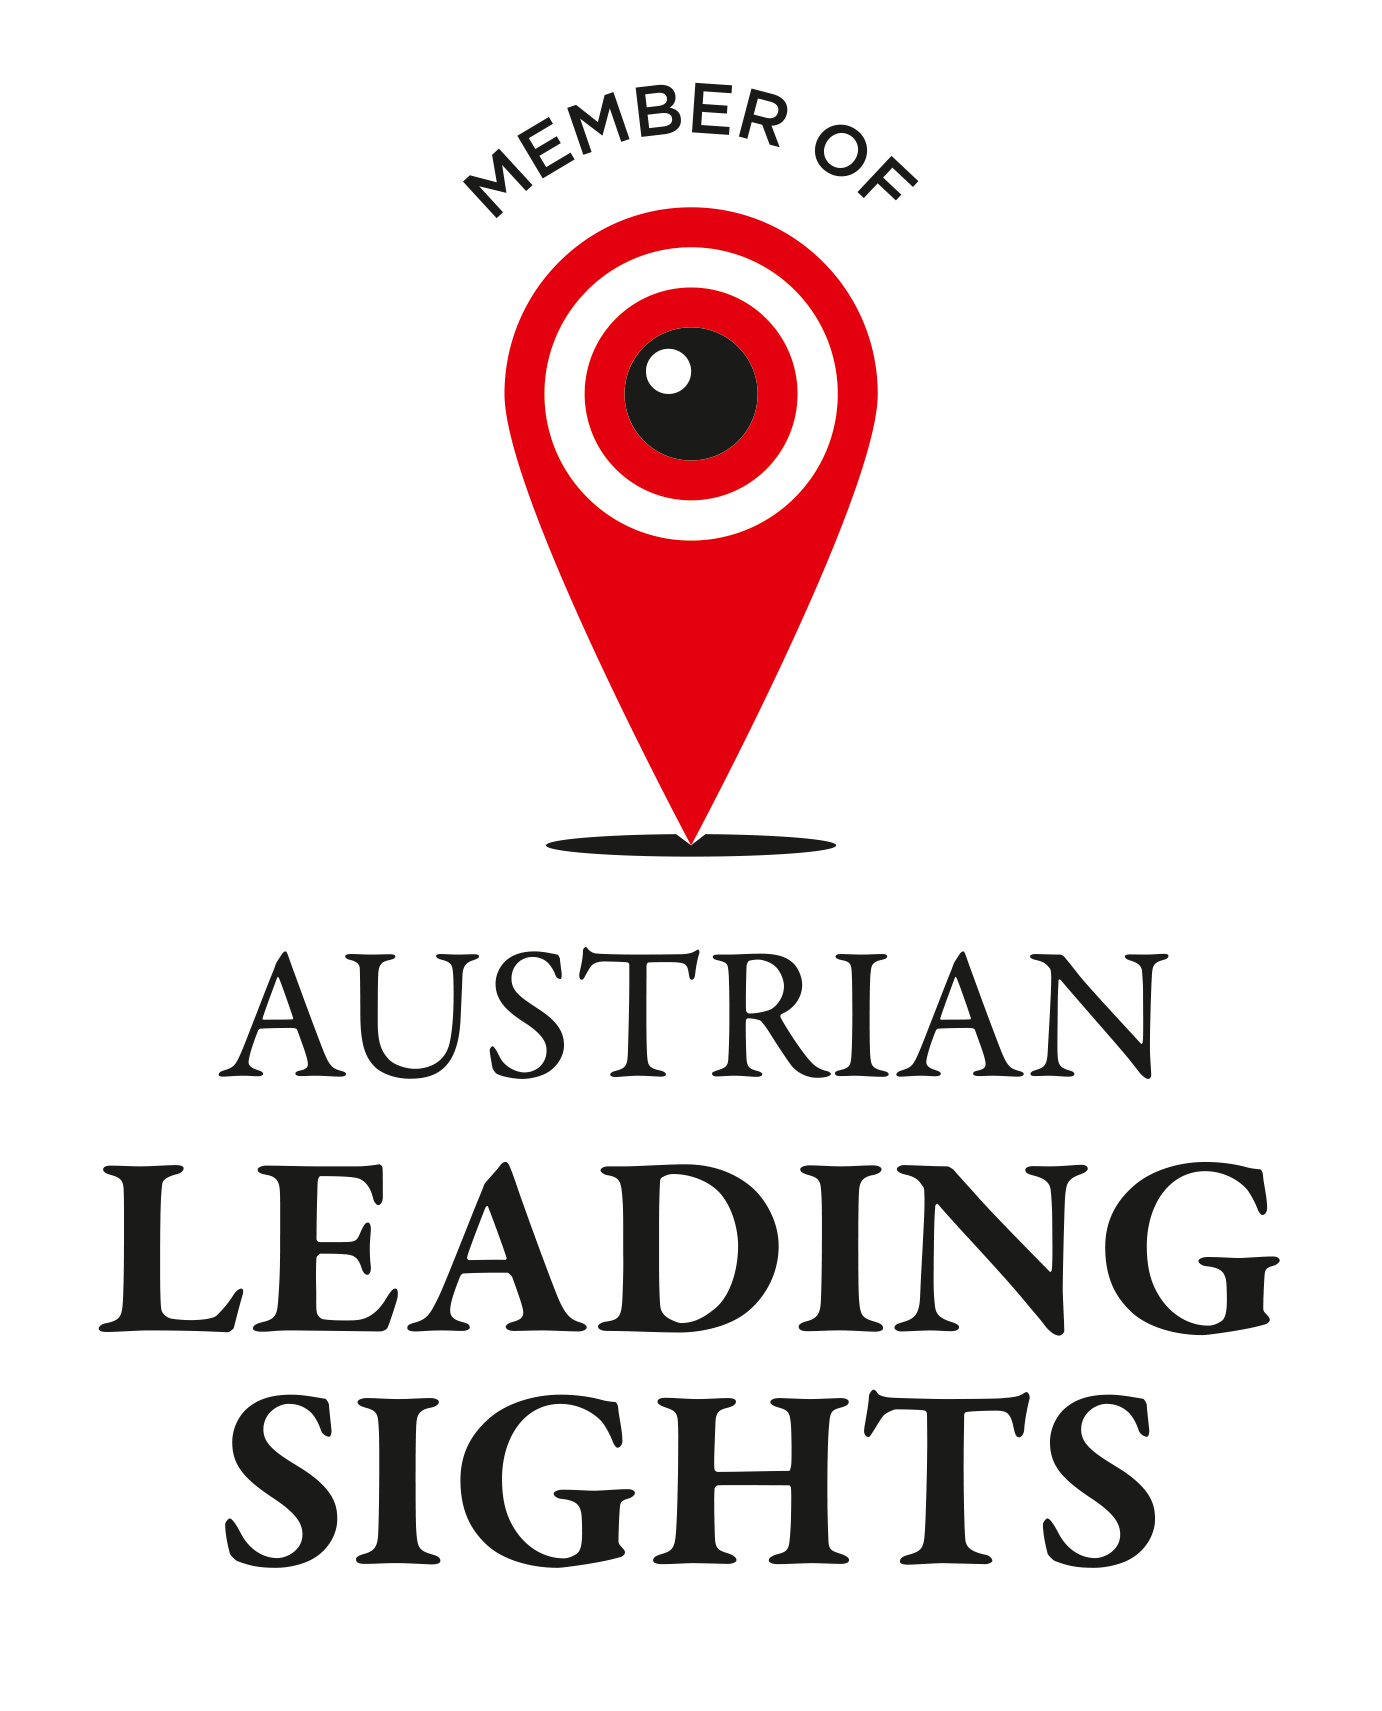 Austrian Leading Sights